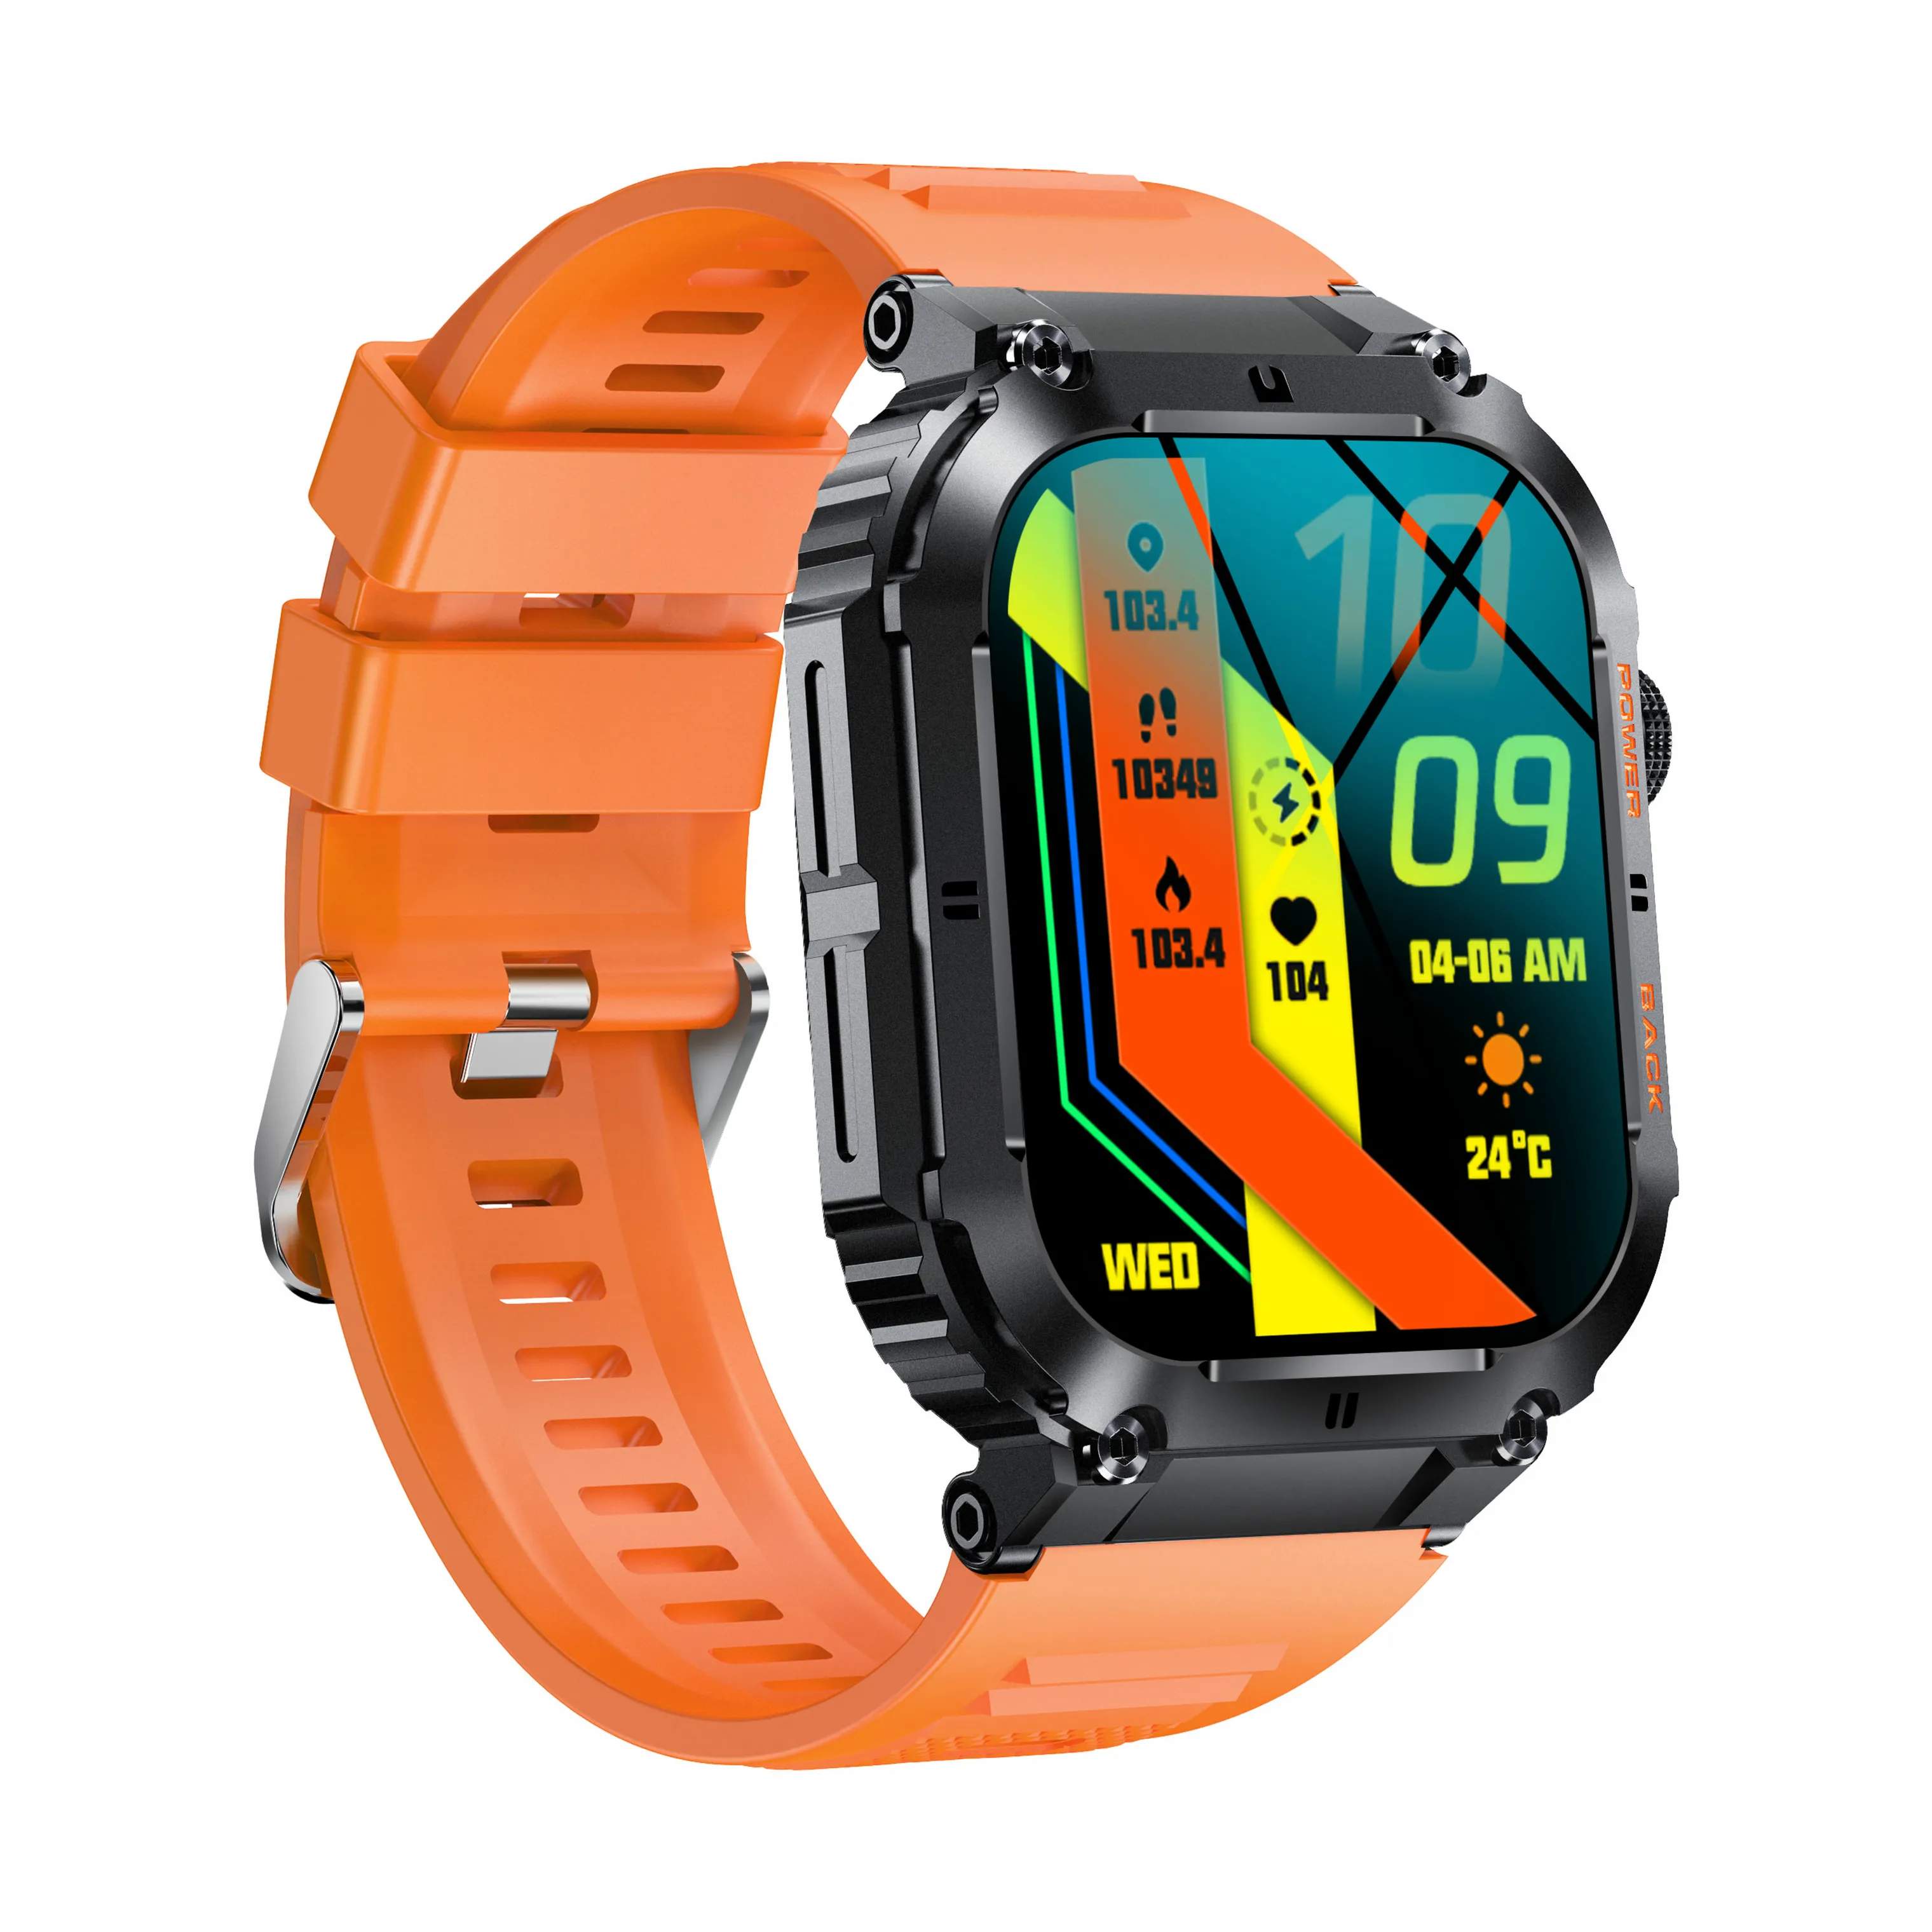 Smartwatch SWC-191, orange, large